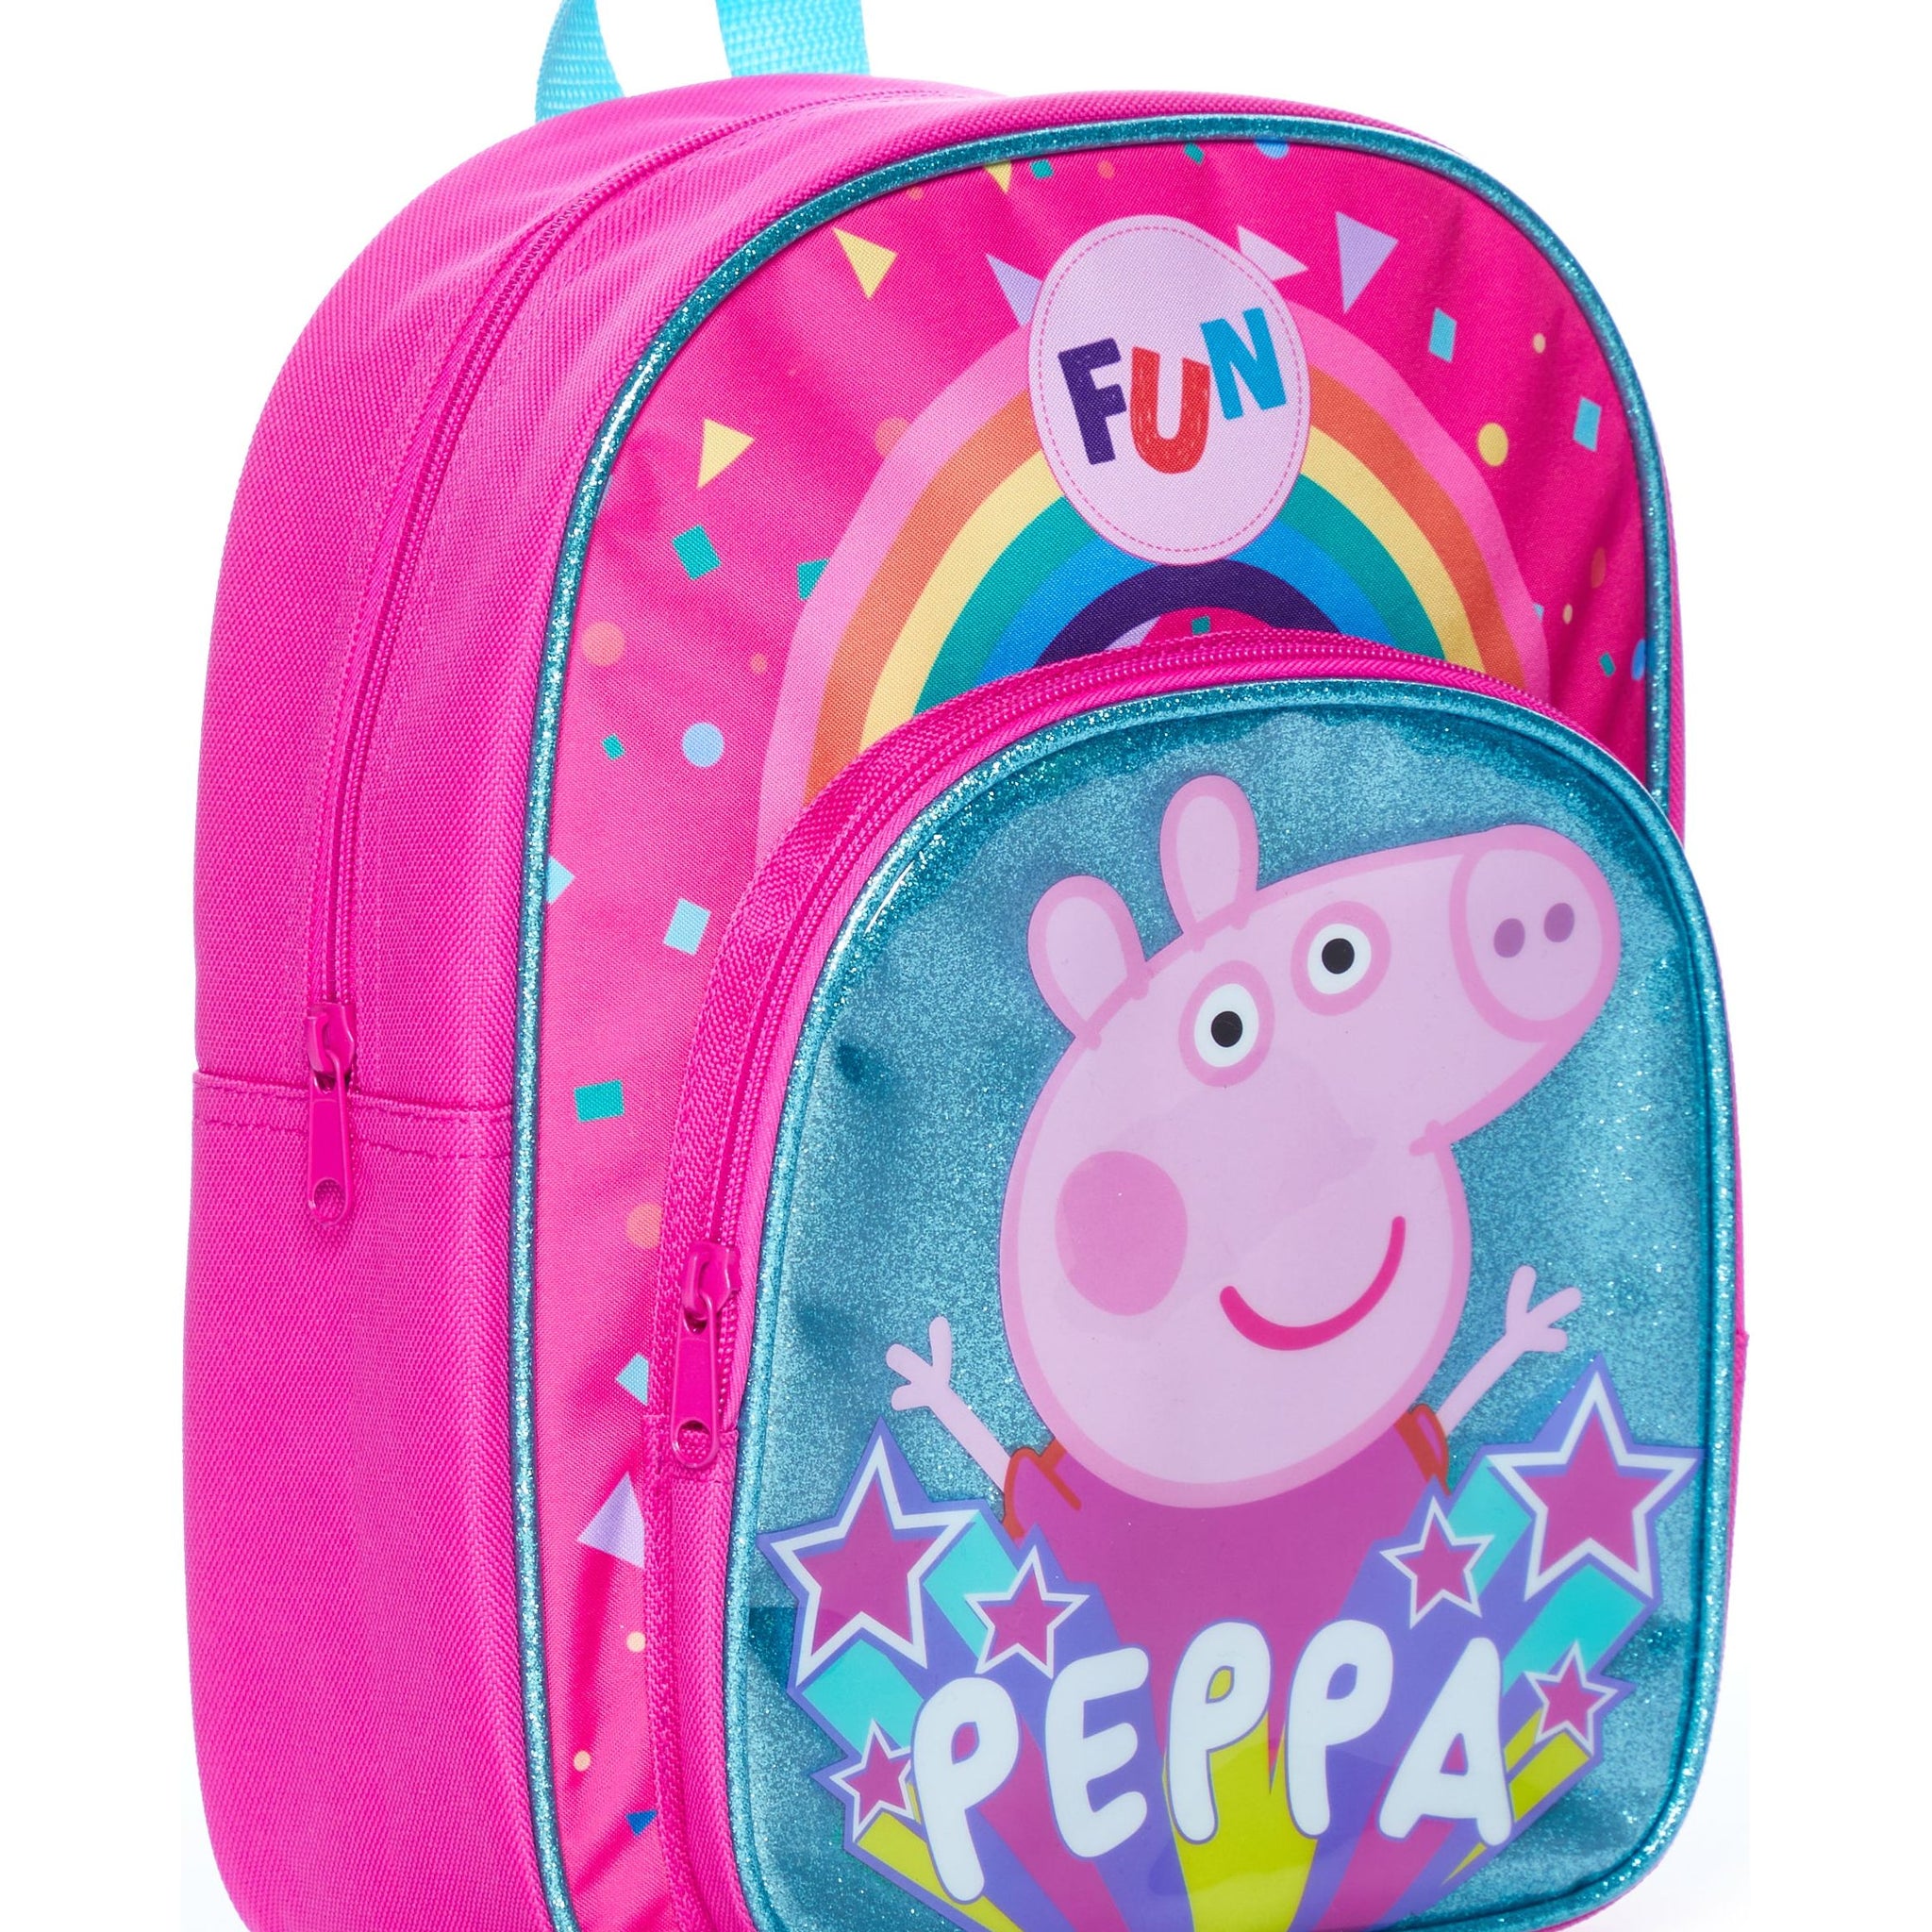 Peppa Pig Bag Toddler Backpack Girls for School Nursery, Gifts for Girls Rainbow